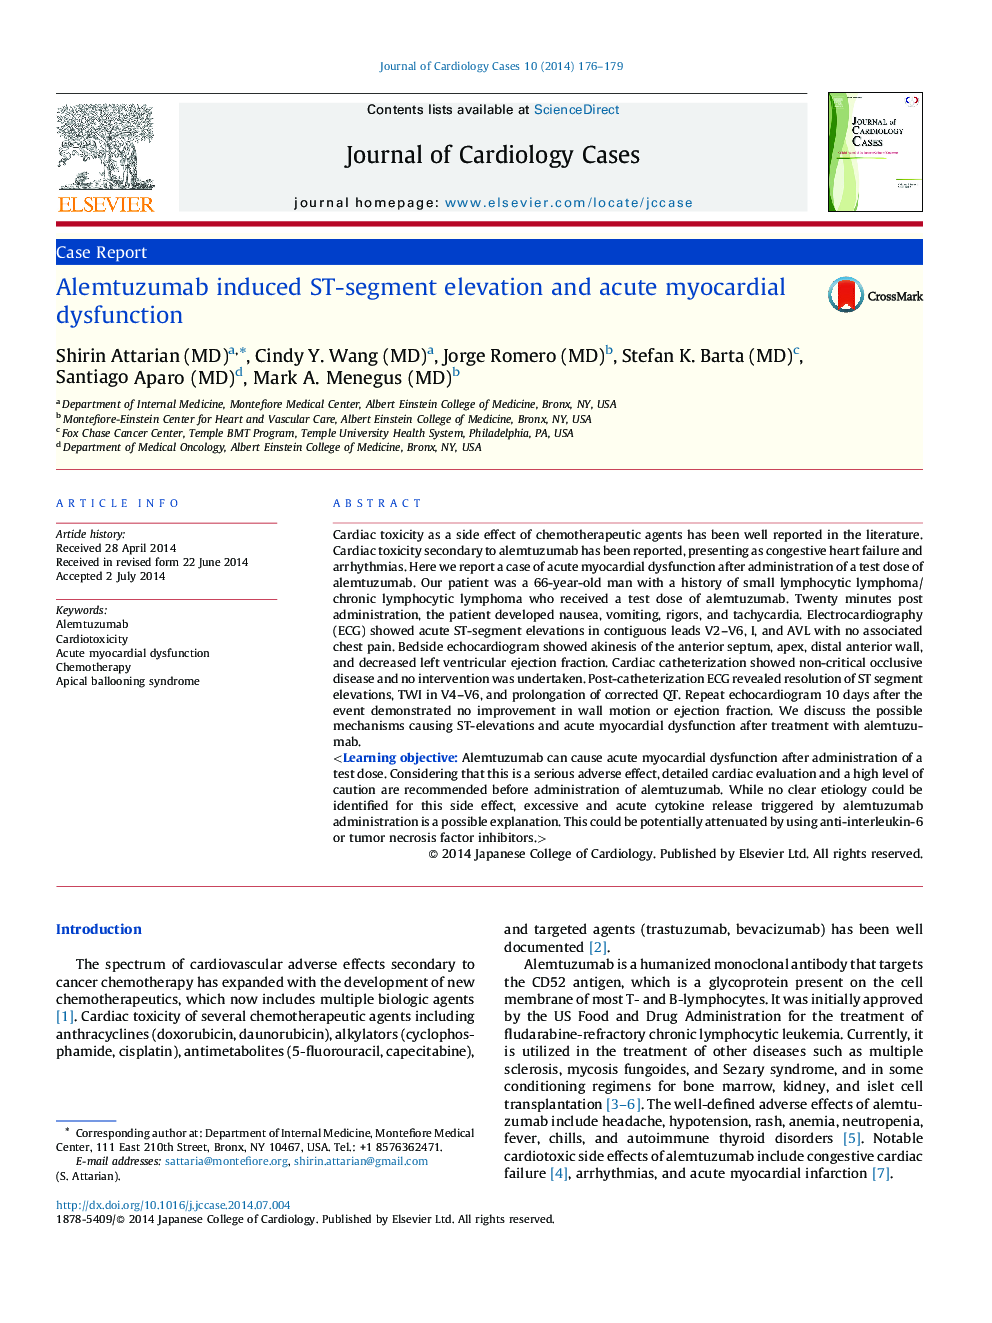 Alemtuzumab induced ST-segment elevation and acute myocardial dysfunction